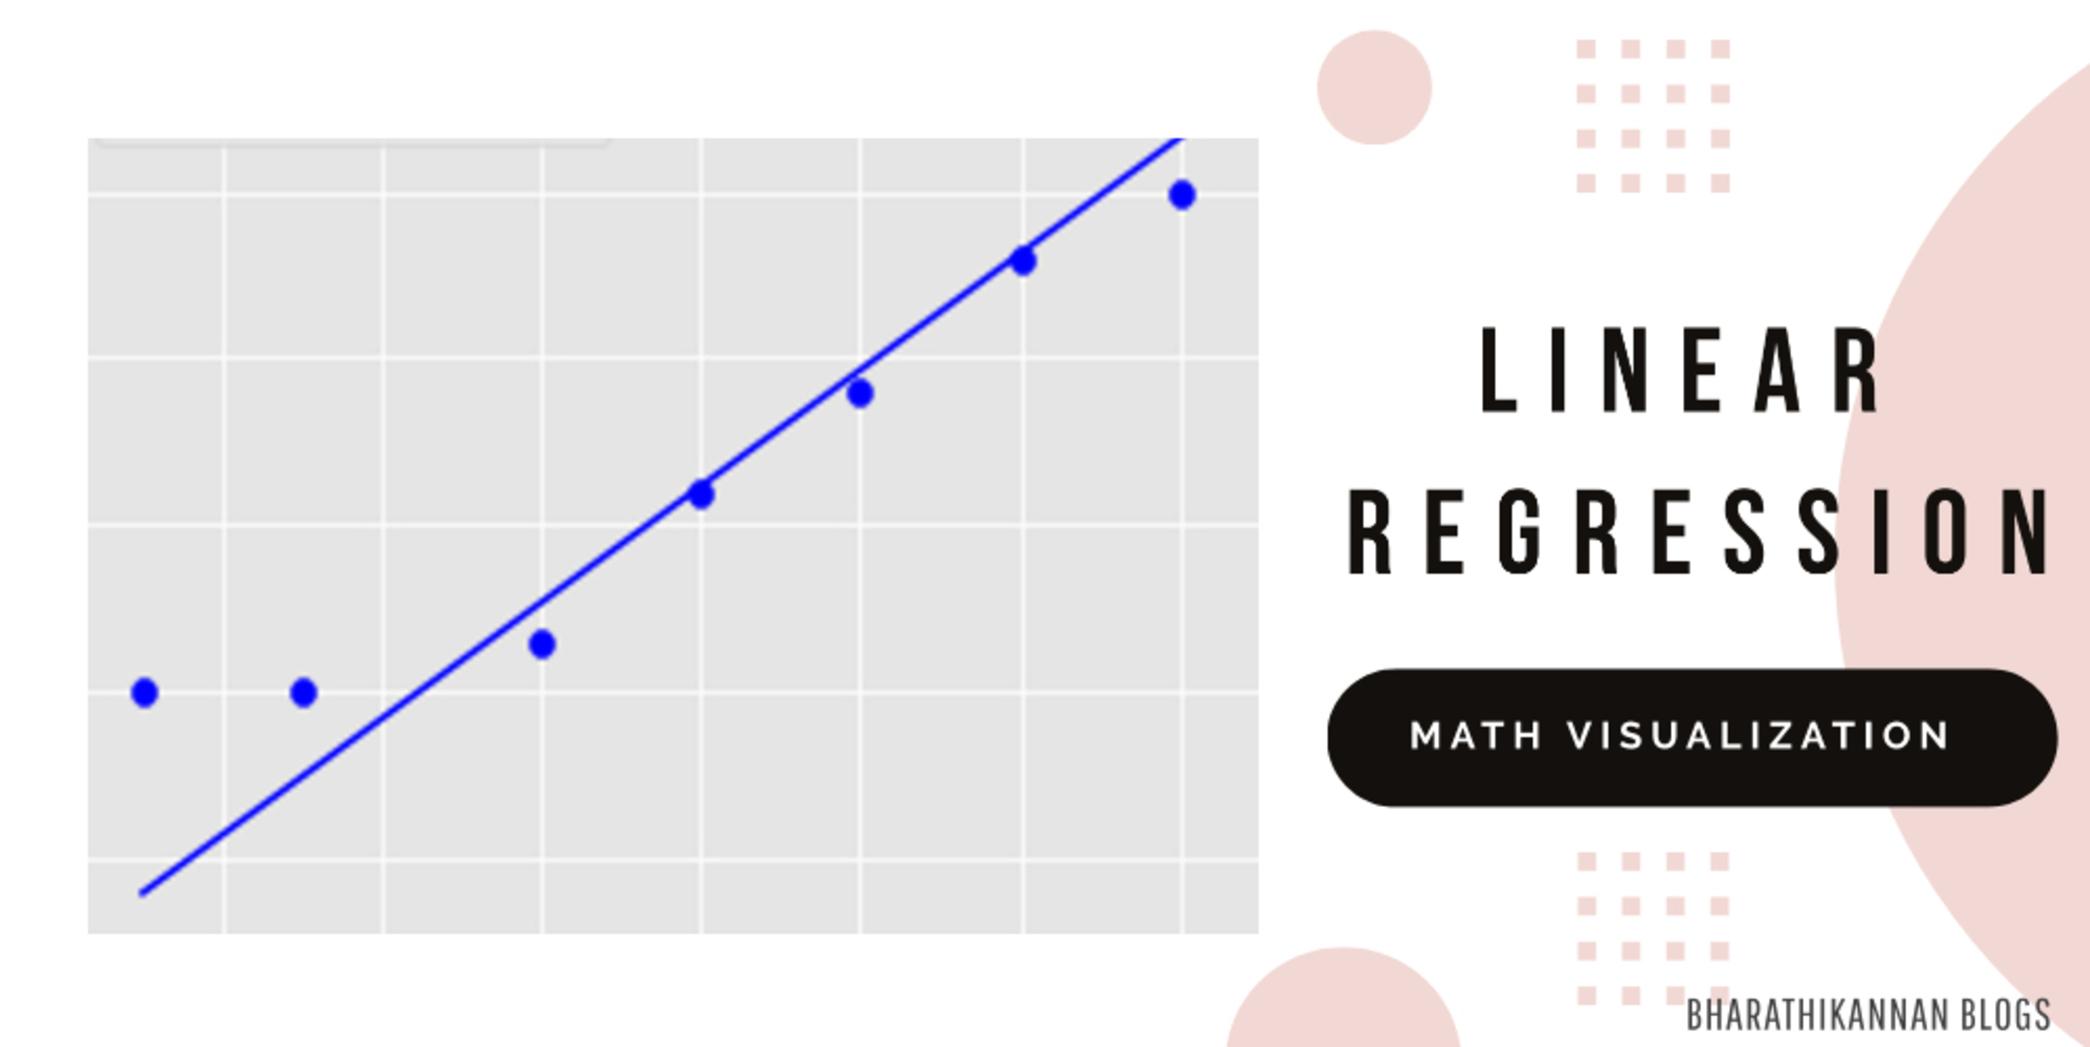 linear-regression